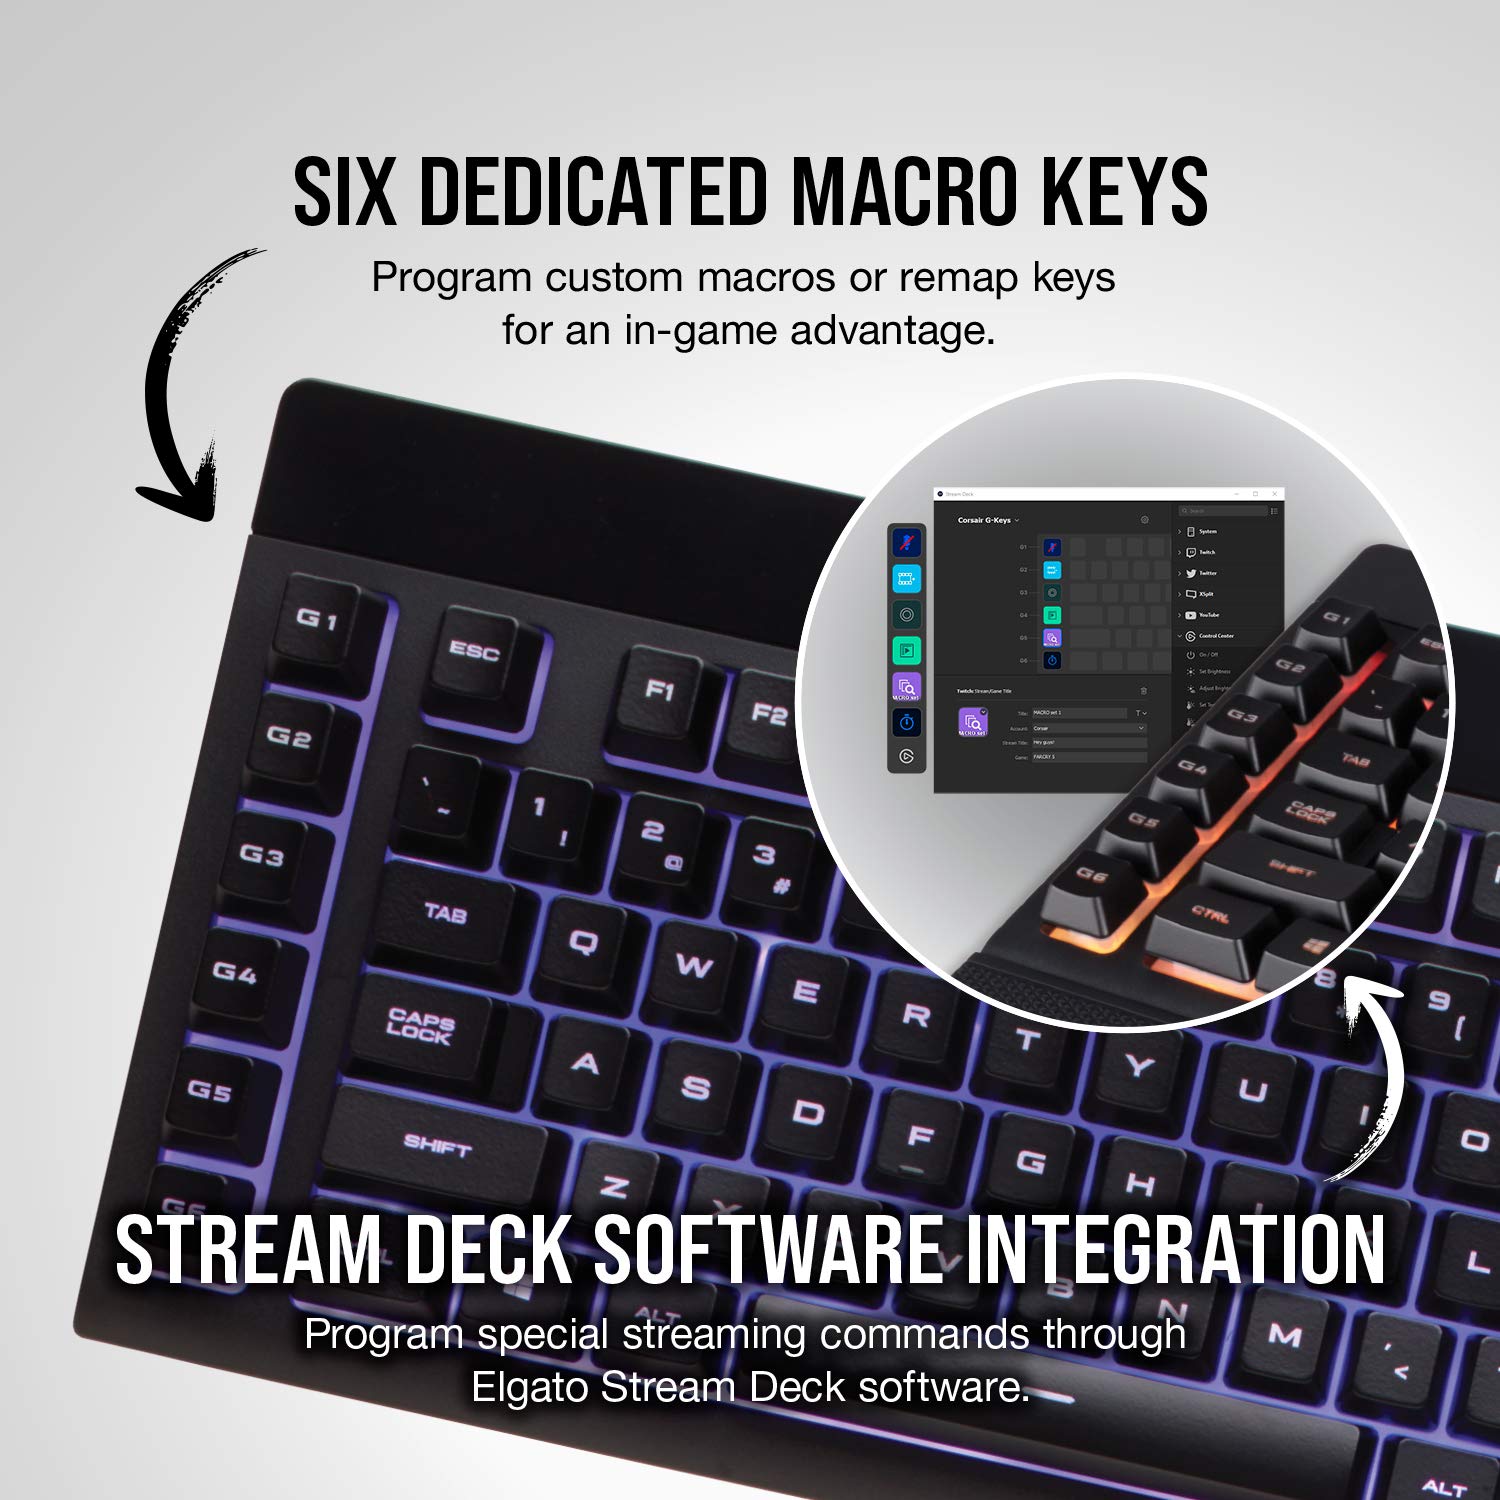 Corsair K55 RGB Gaming Keyboard – IP42 Dust and Water Resistance – 6 Programmable Macro Keys – Dedicated Media Keys - Detachable Palm Rest Included (CH-9206015-NA) , Black